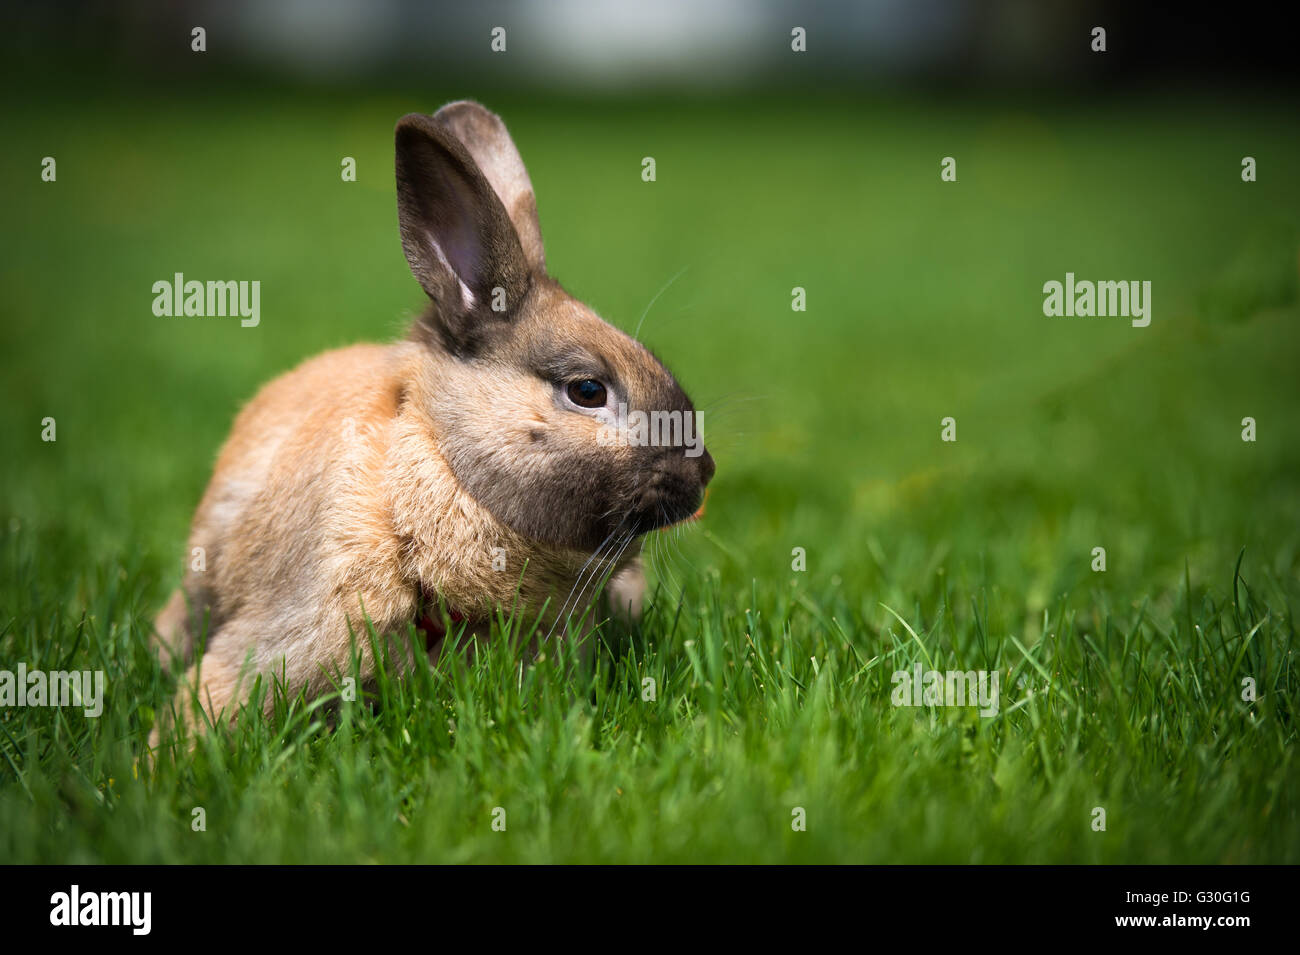 Rabbit sitting in a grass field Stock Photo